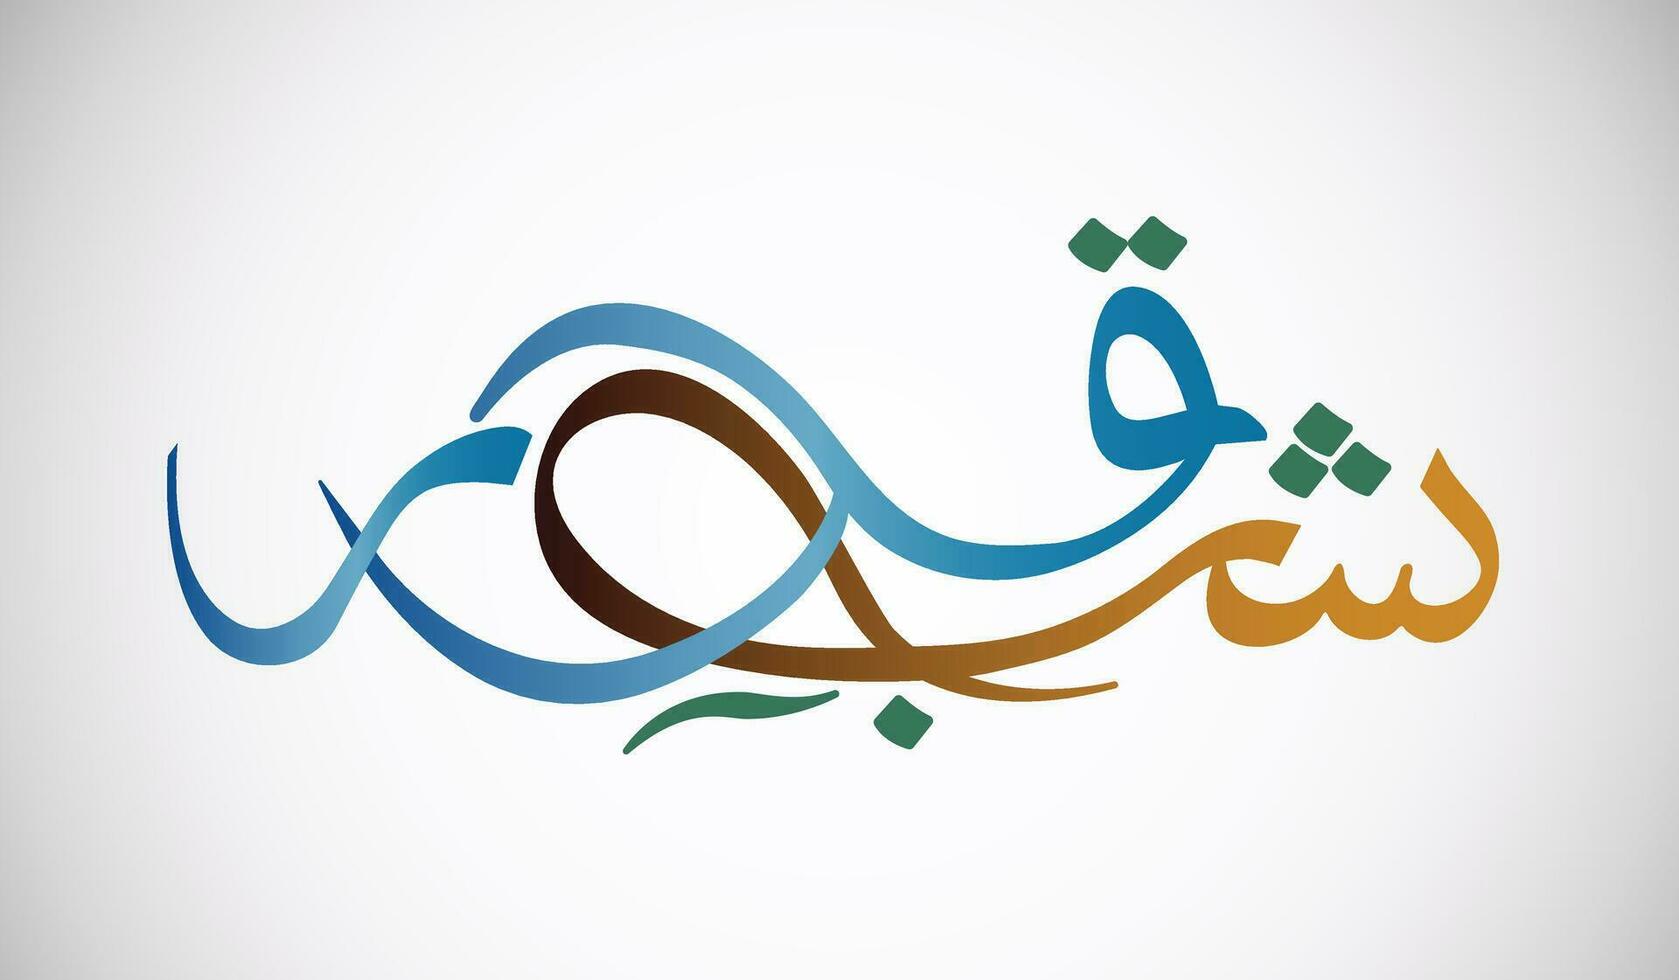 Urdu Calligraphy Of Shab e Qadr Islamic Calligraphy Isolated On White Background Vector illustration